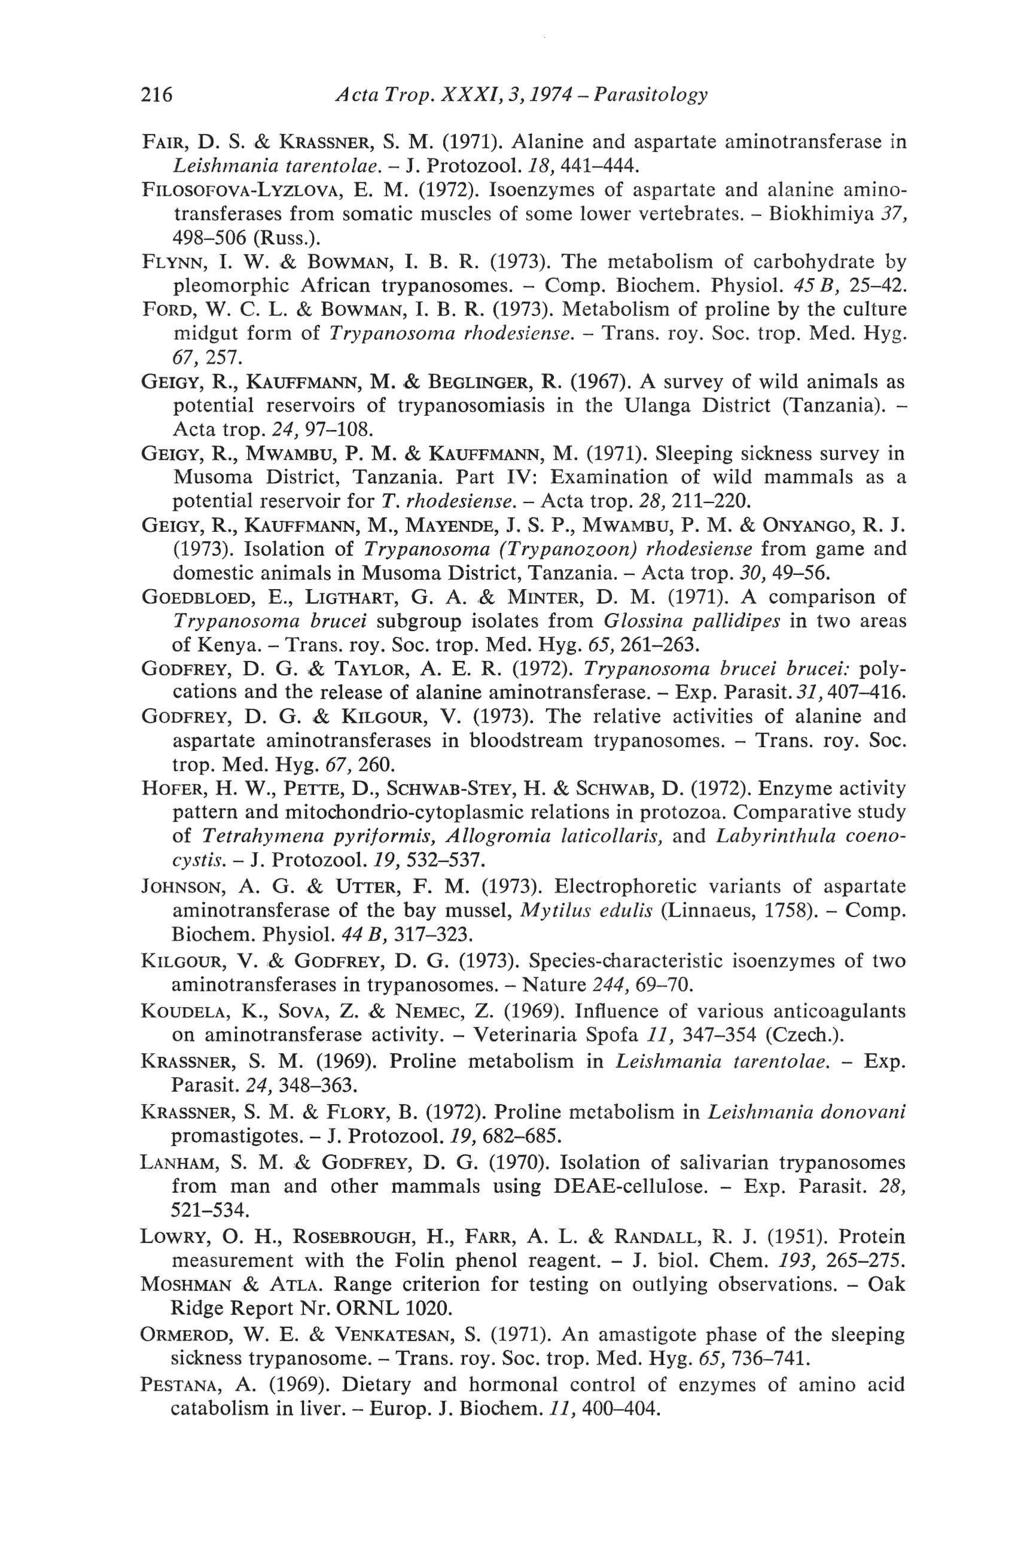 216 Ada Trop. XXXI, 3,1974 - Parasitology Fair, D. S. & Krassner, S. M. (1971). Alanine and aspartate aminotransferase in Leishmania tarentolae. - J. Protozool. 18, 441-444. Filosofova-Lyzlova, E. M. (1972).